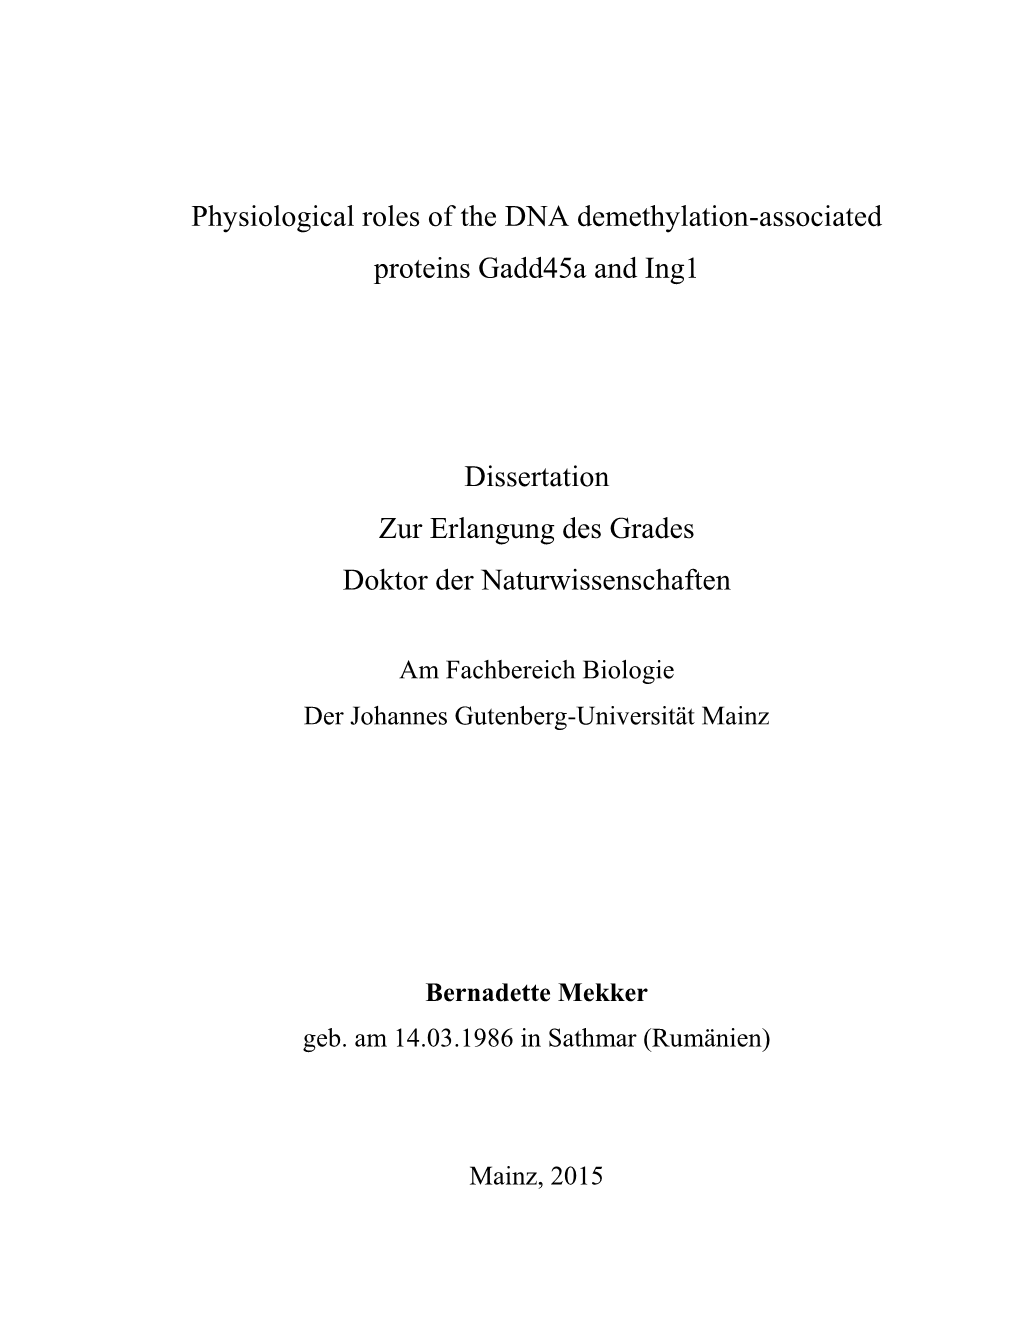 Physiological Roles of the DNA Demethylation-Associated Proteins Gadd45a and Ing1 Dissertation Zur Erlangung Des Grades Doktor D